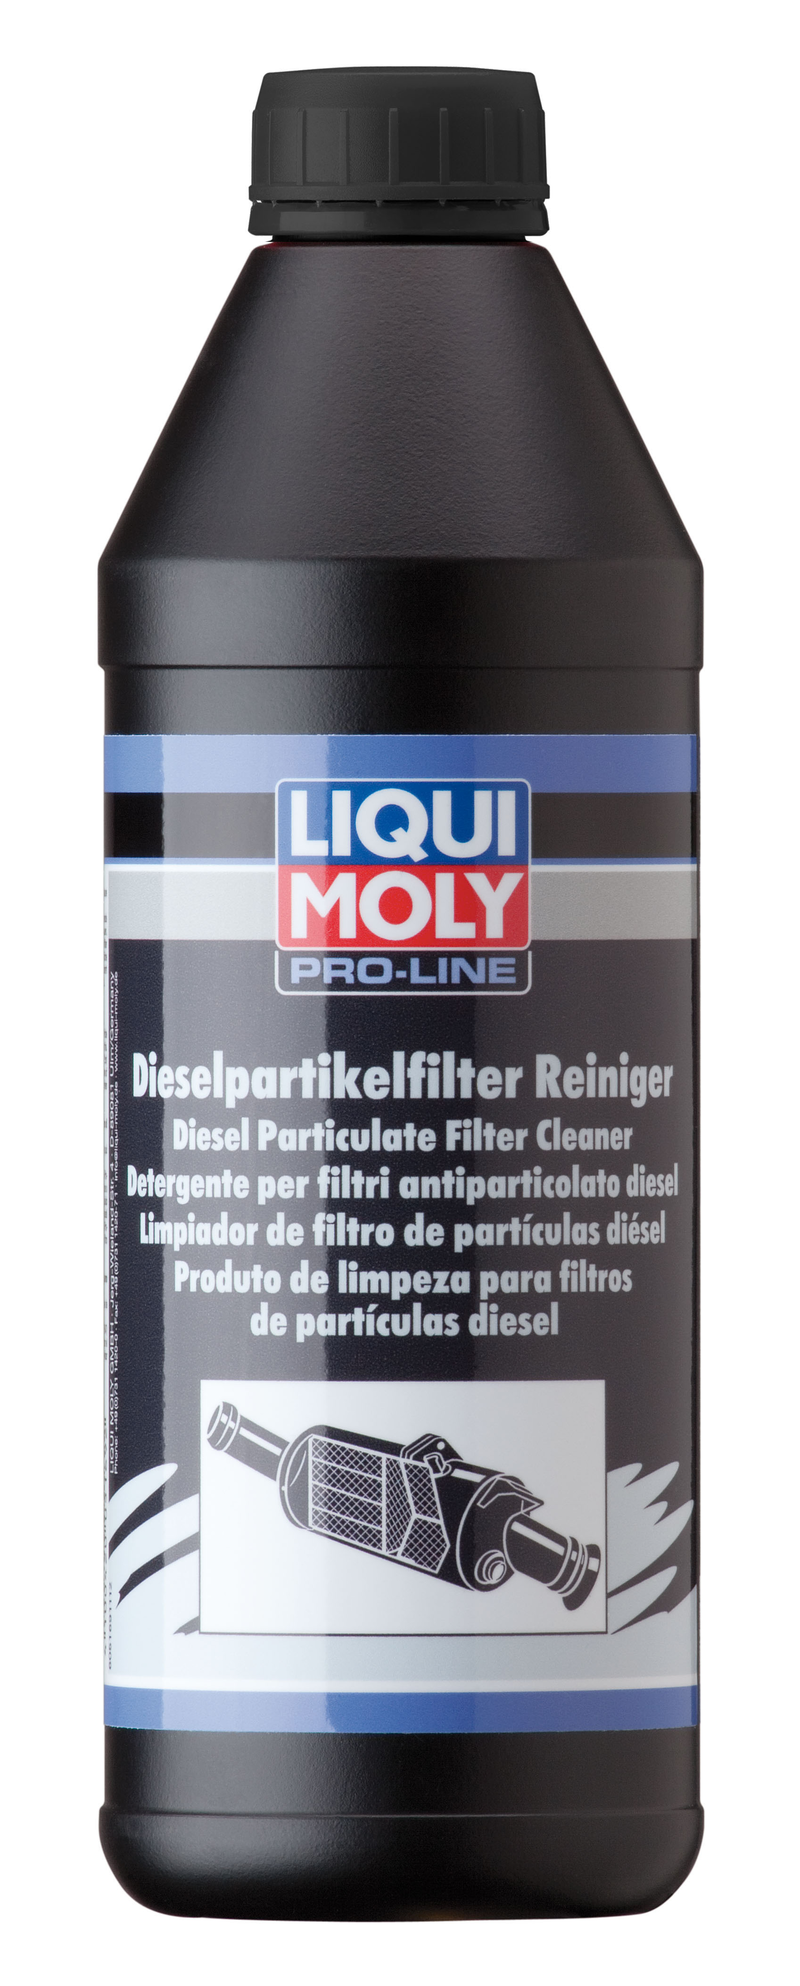 Pro-Line Limpiador de filtro de partículas diésel (1 L) Liqui Moly